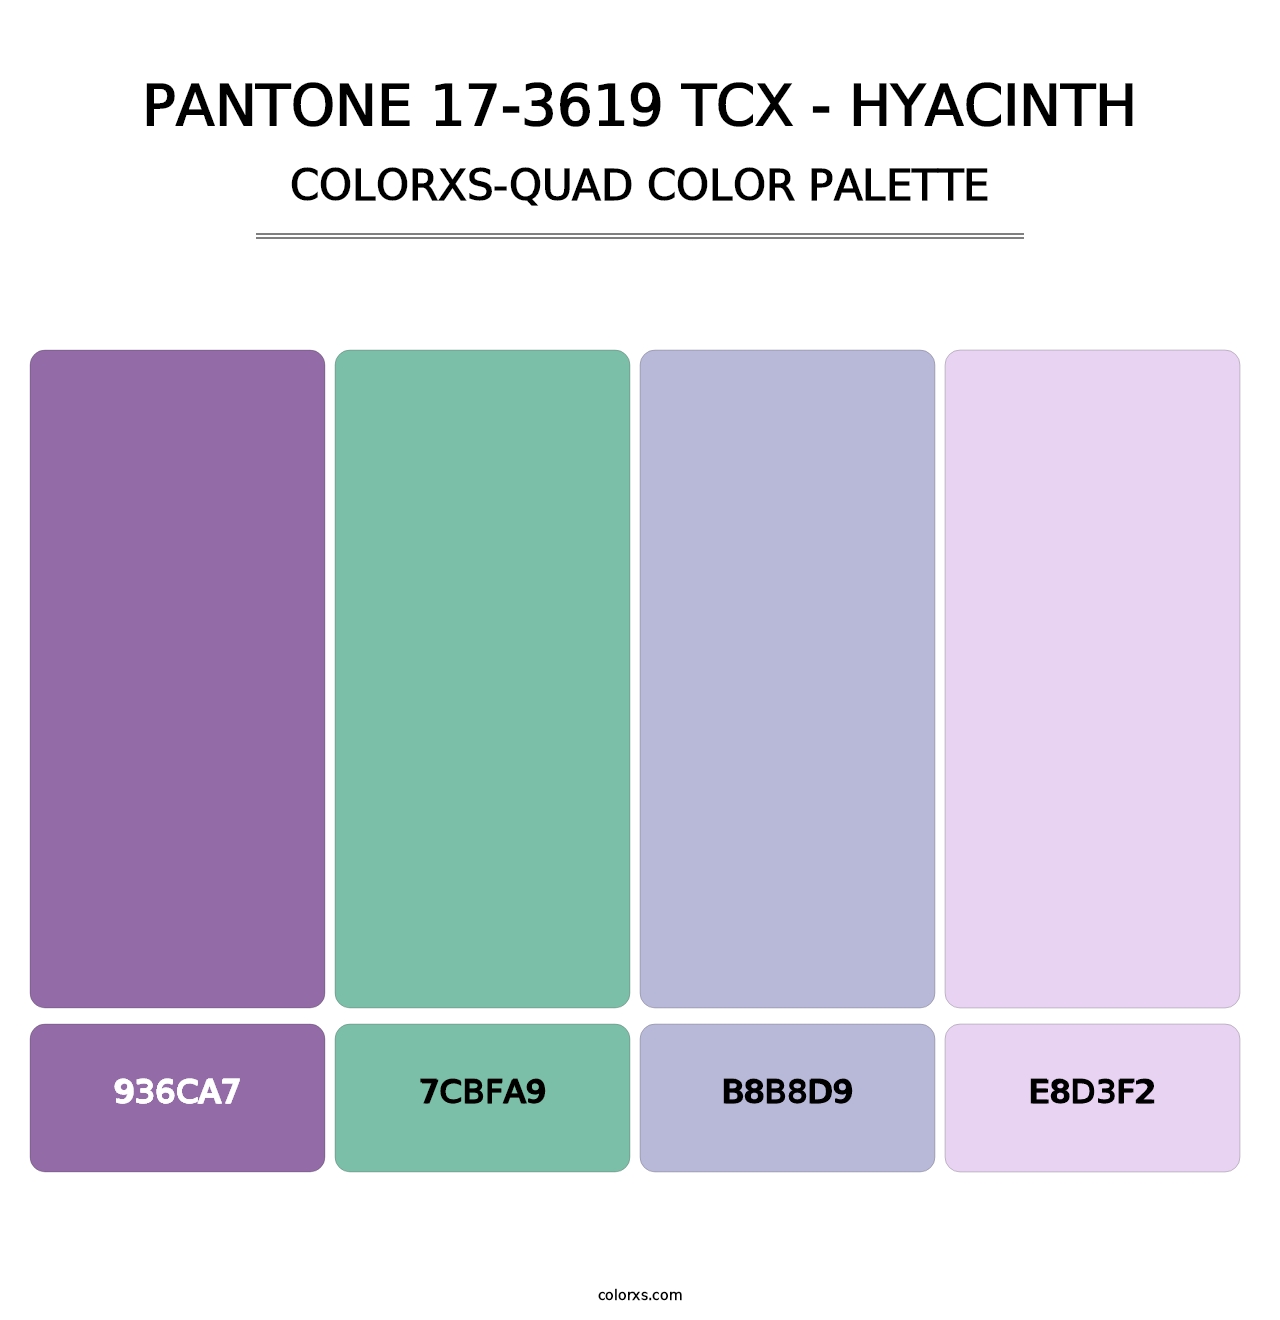 PANTONE 17-3619 TCX - Hyacinth - Colorxs Quad Palette